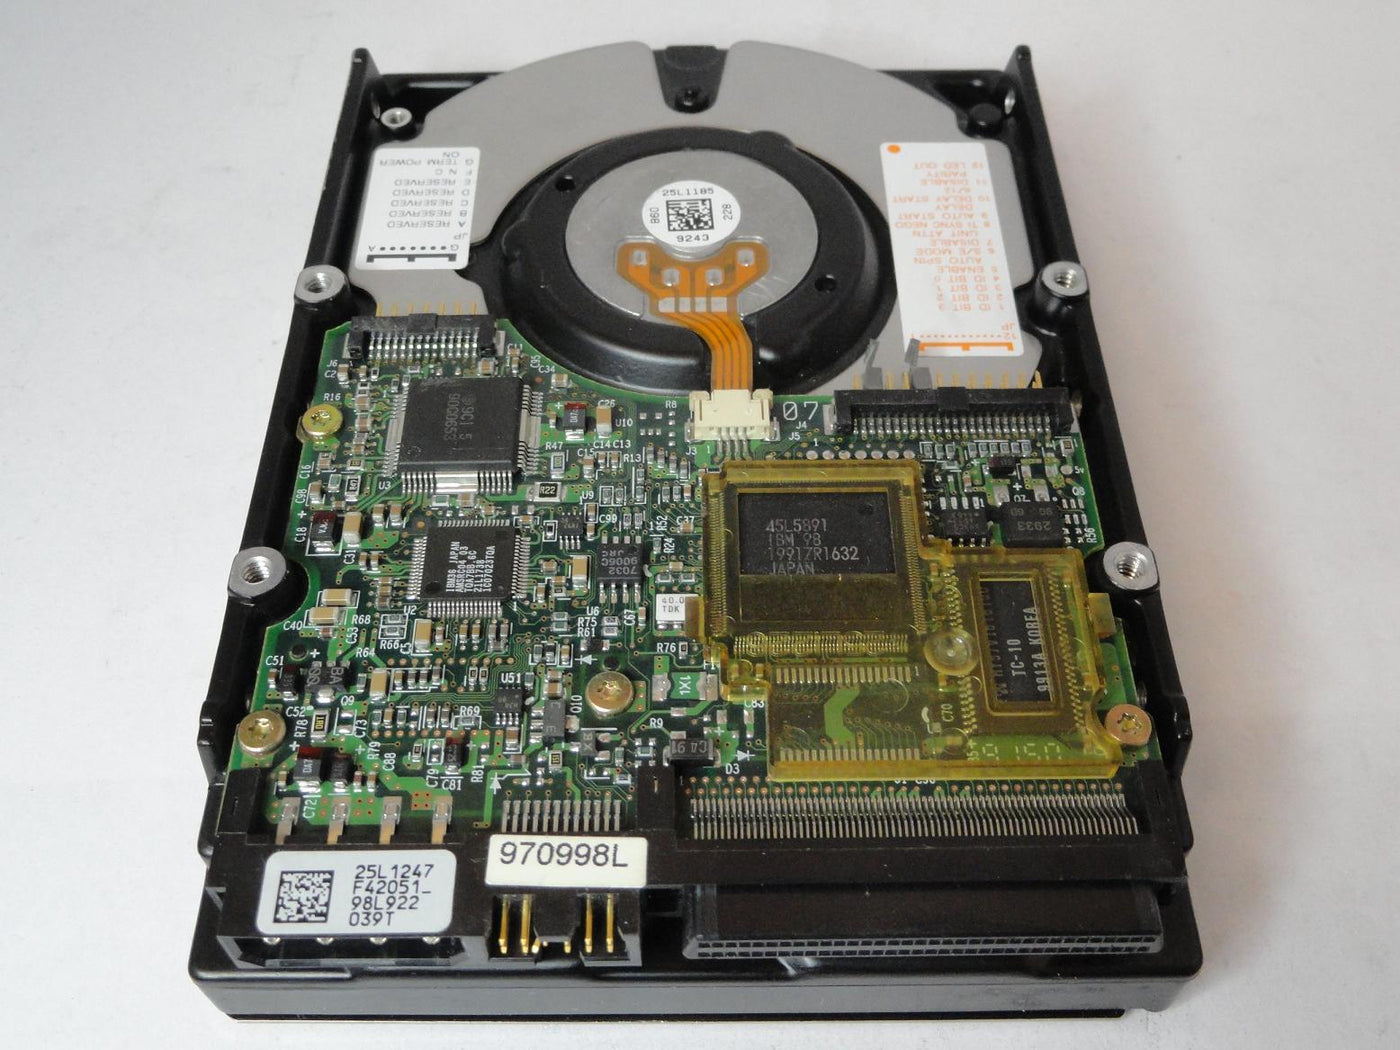 PR23243_25L1910_IBM 9.1GB SCSI 68 Pin 7200rpm 3.5in HDD - Image2